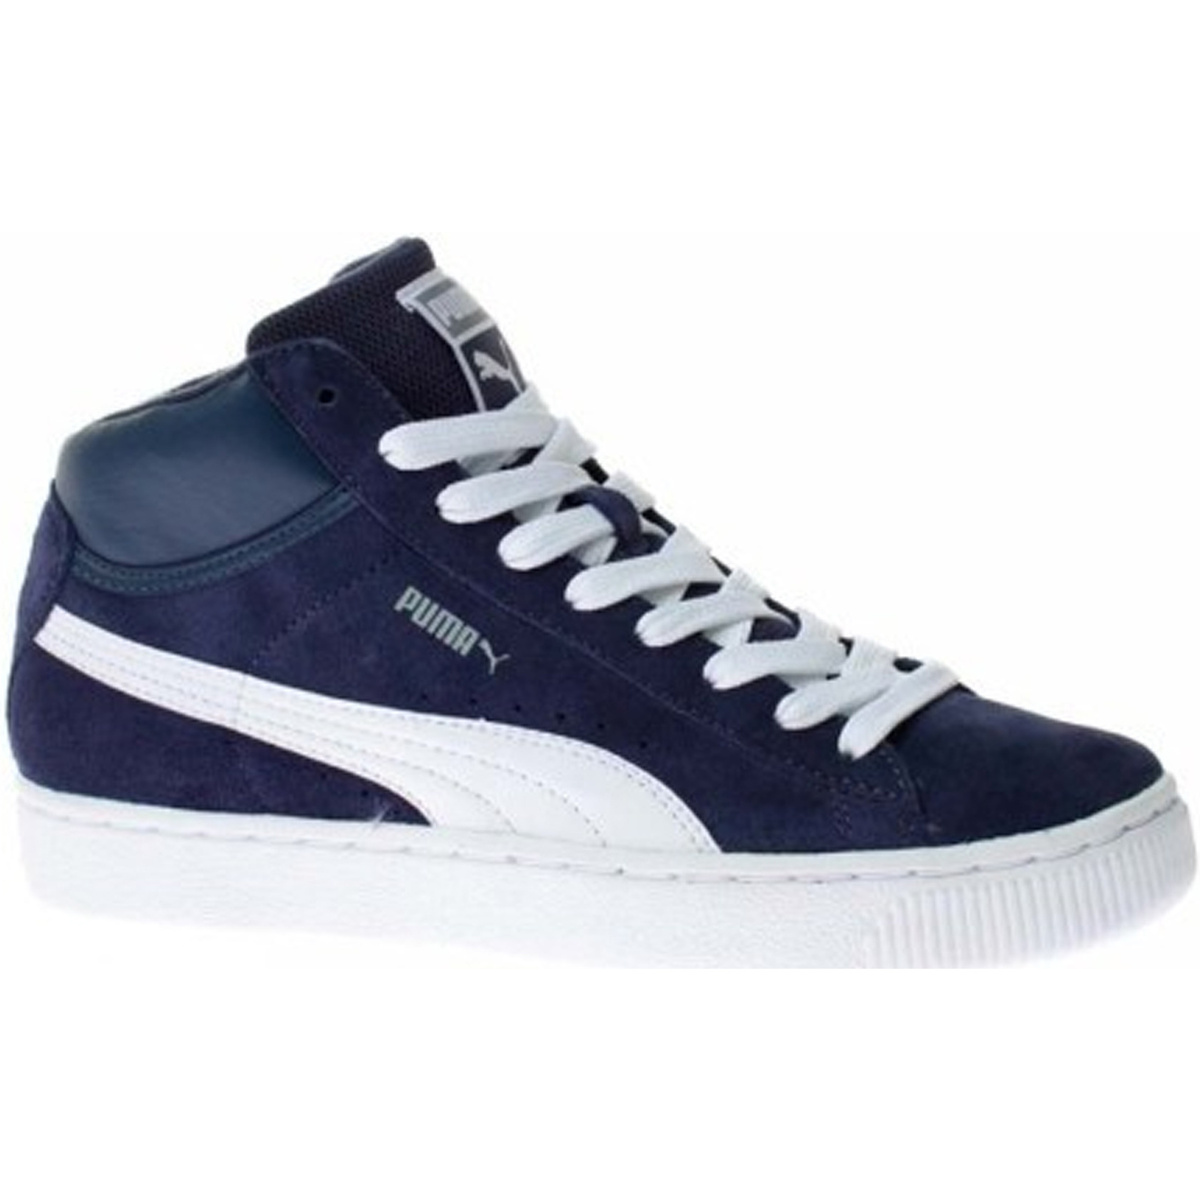 Zapatos Niño Deportivas Moda Puma 350451 Azul